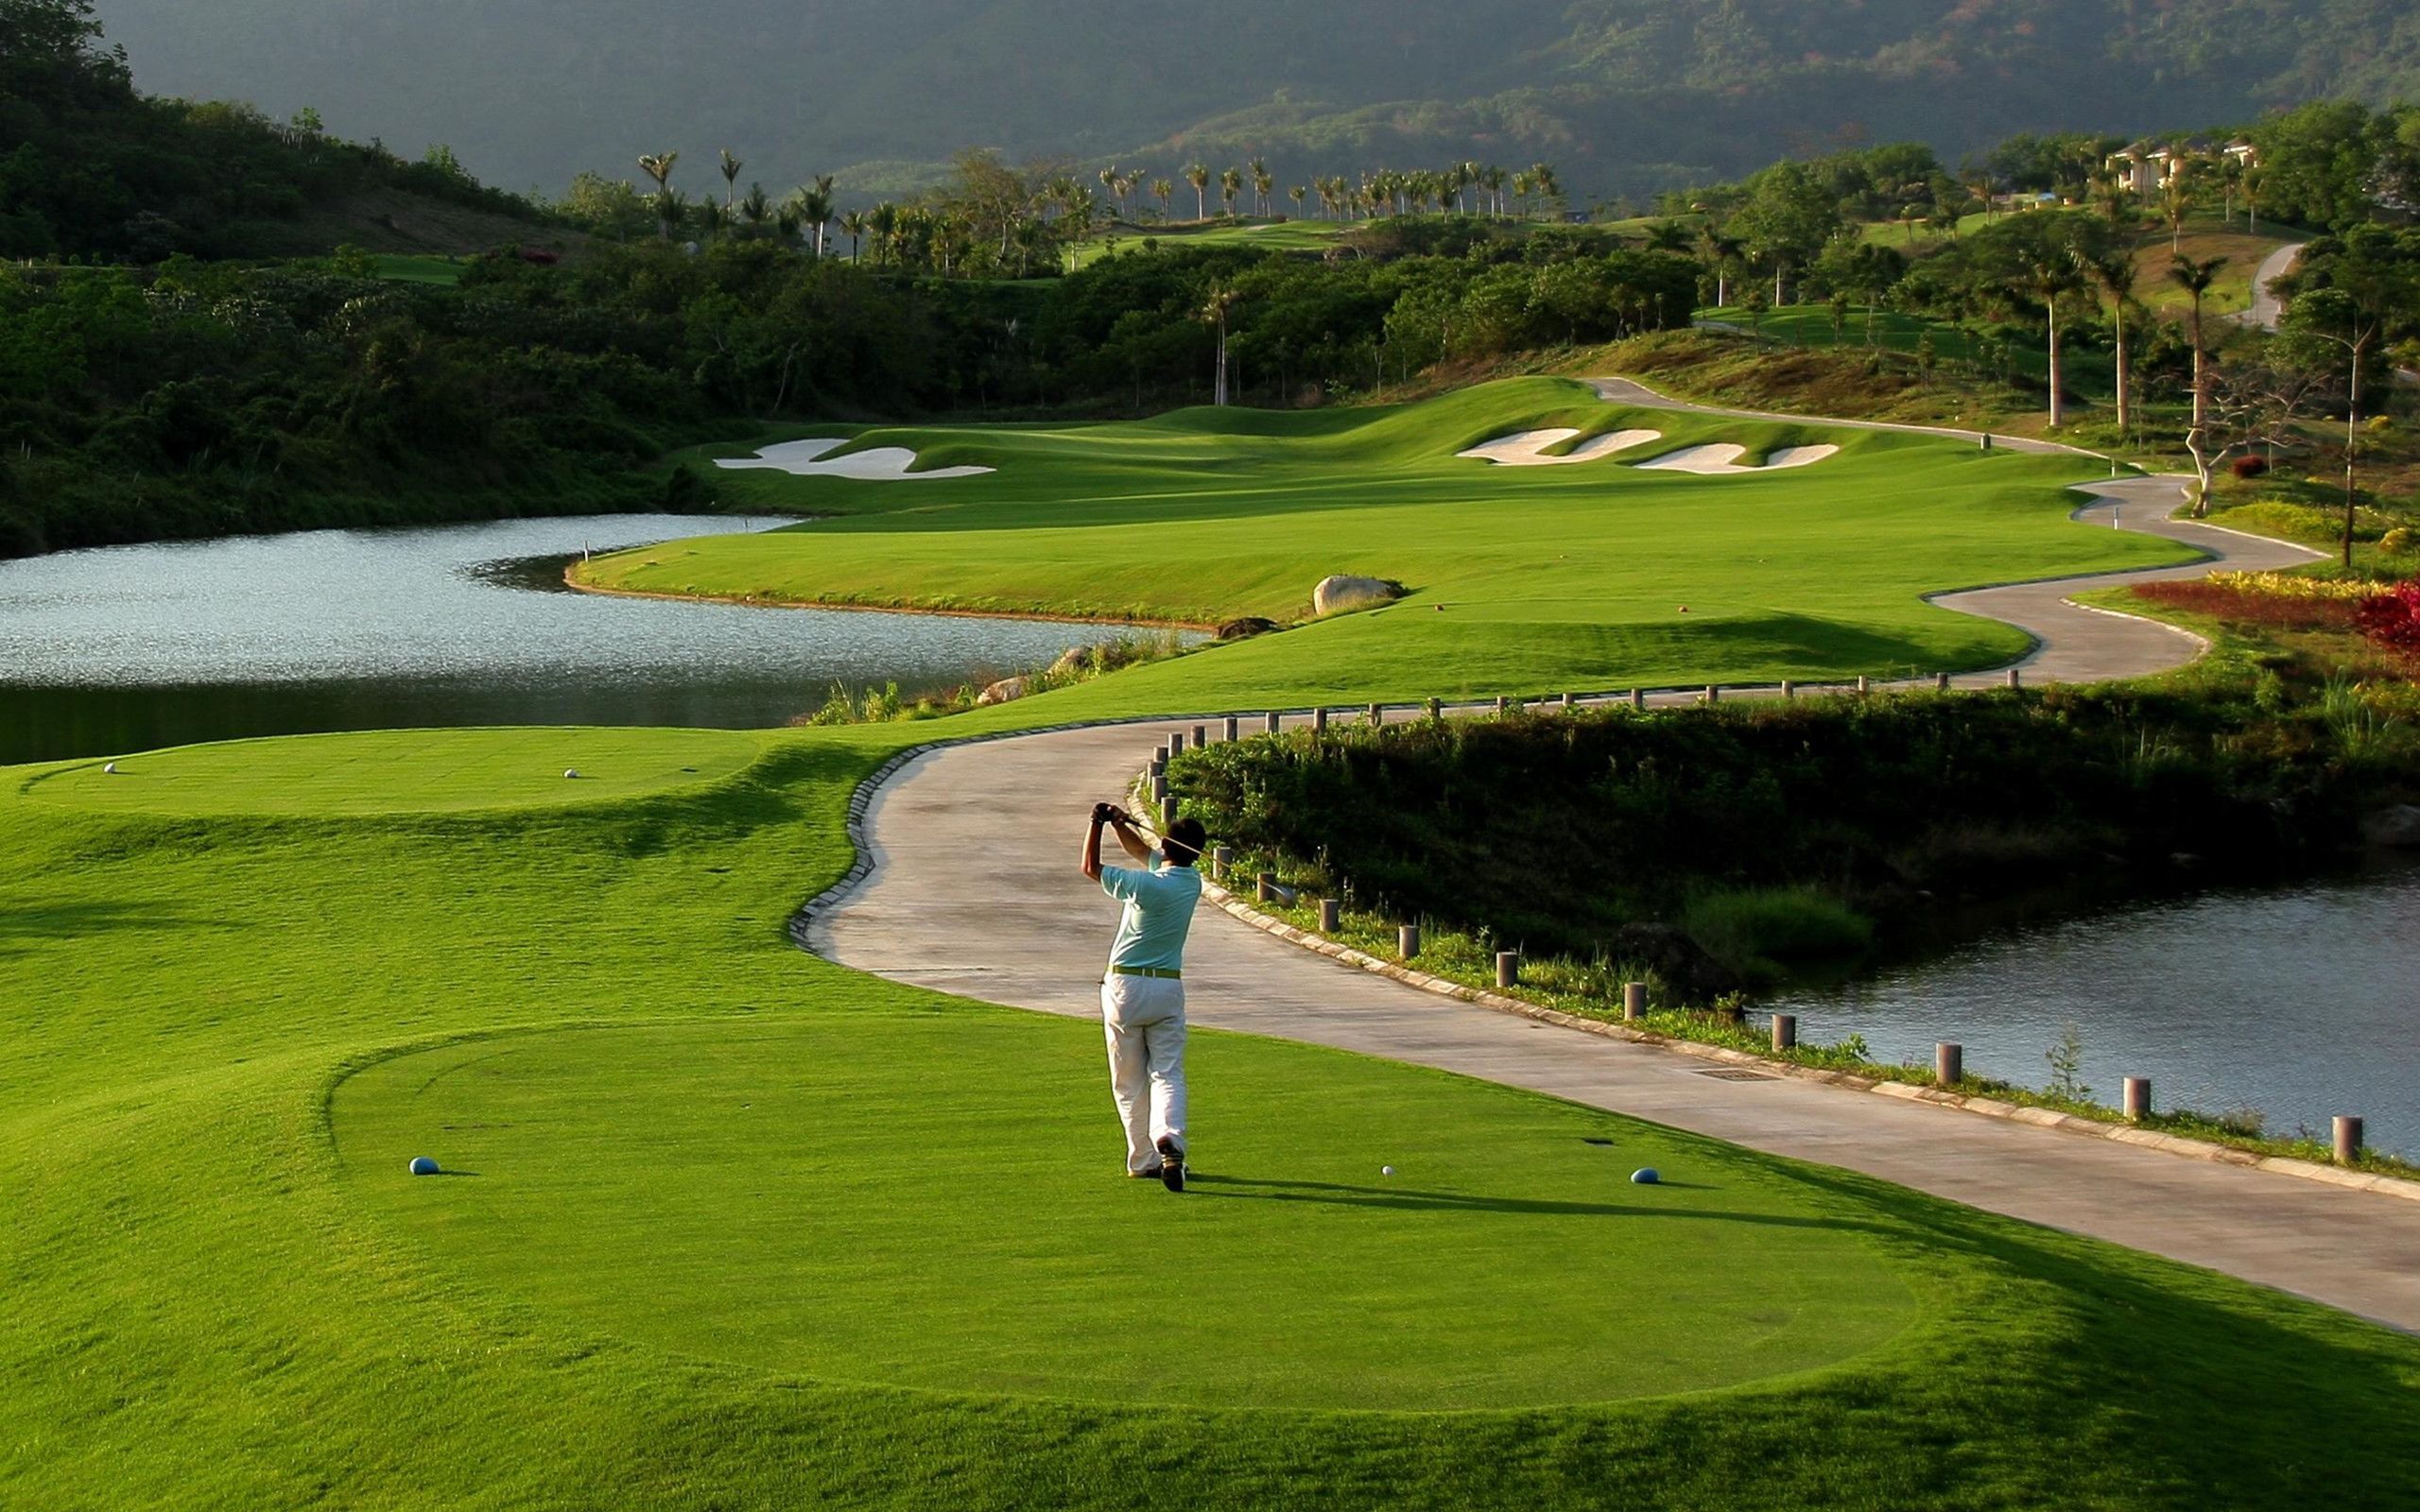 Golf Desktop Wallpaper, Golf Courses Images, New Backgrounds